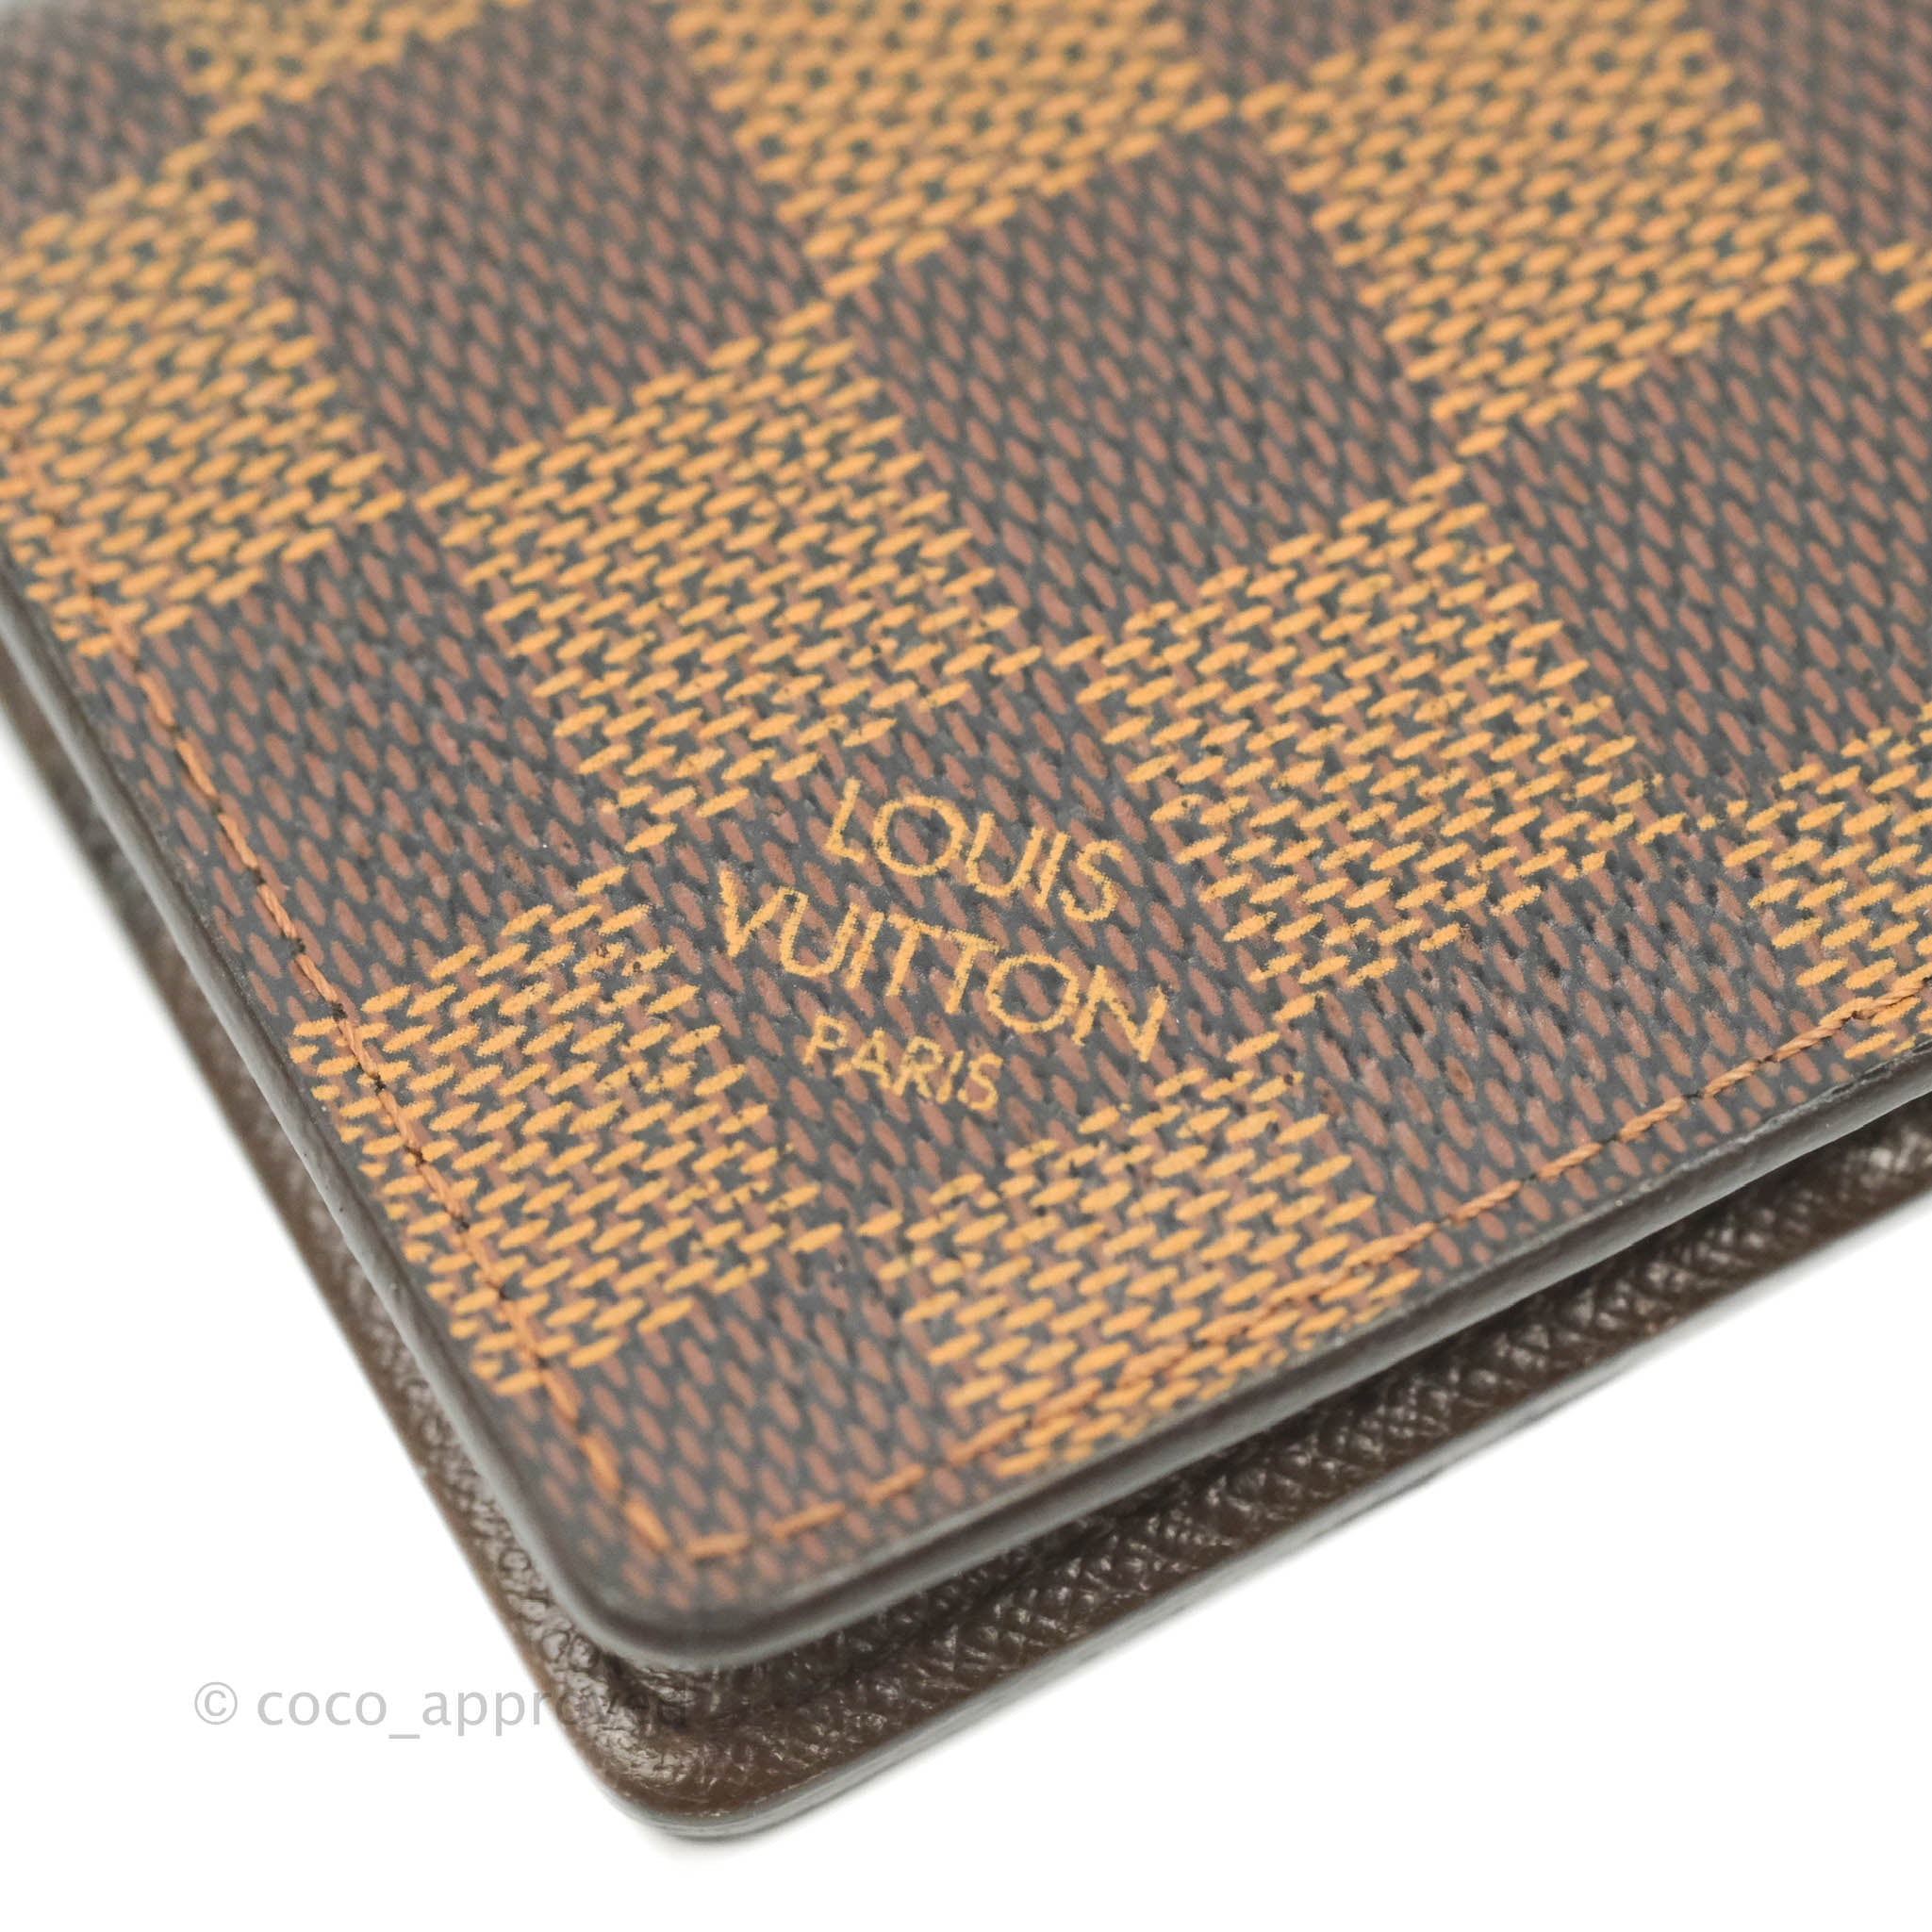 Louis Vuitton, Accessories, Louis Vuitton Damier Azur Pocket Organizer  Wallet